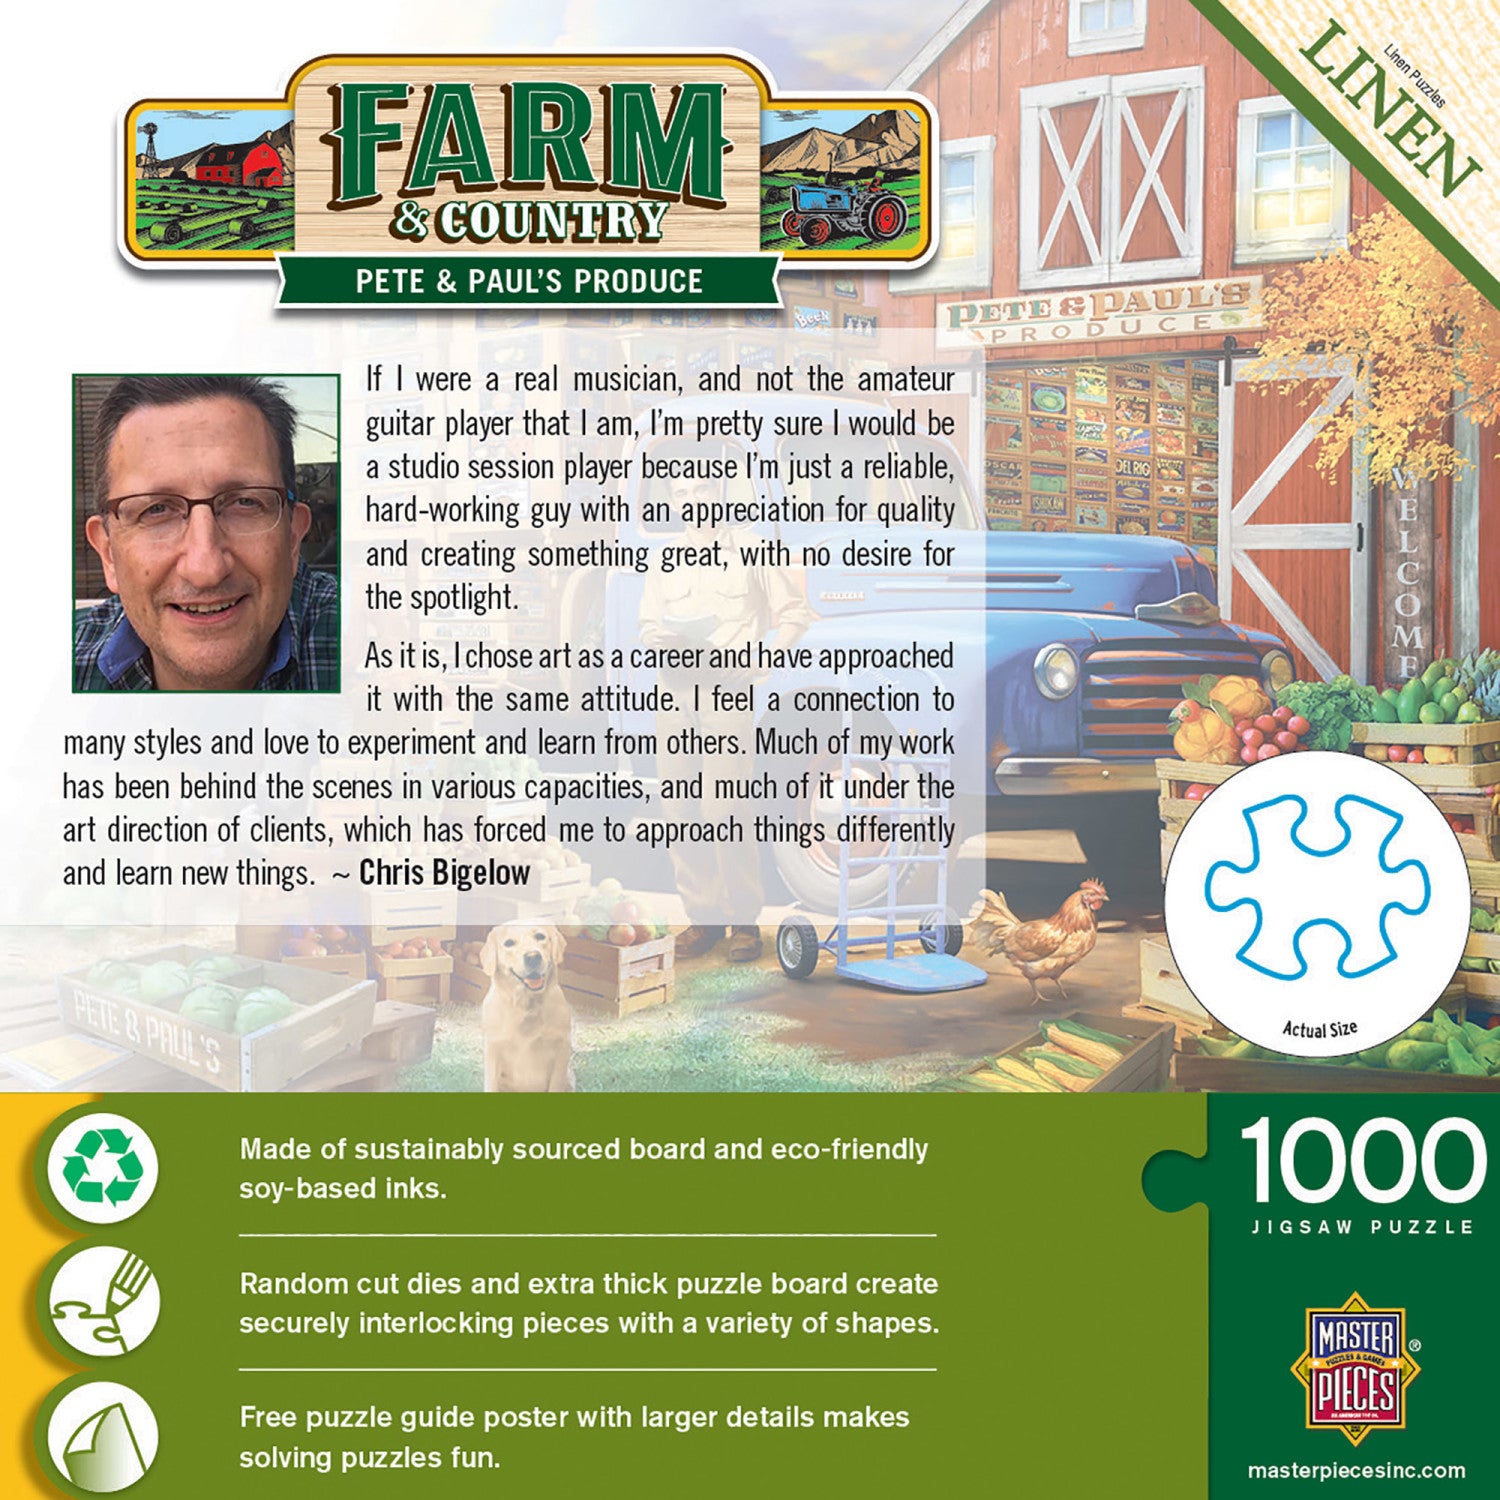 Farm & Country - Pete & Paul's Produce 1000 Piece Jigsaw Puzzle